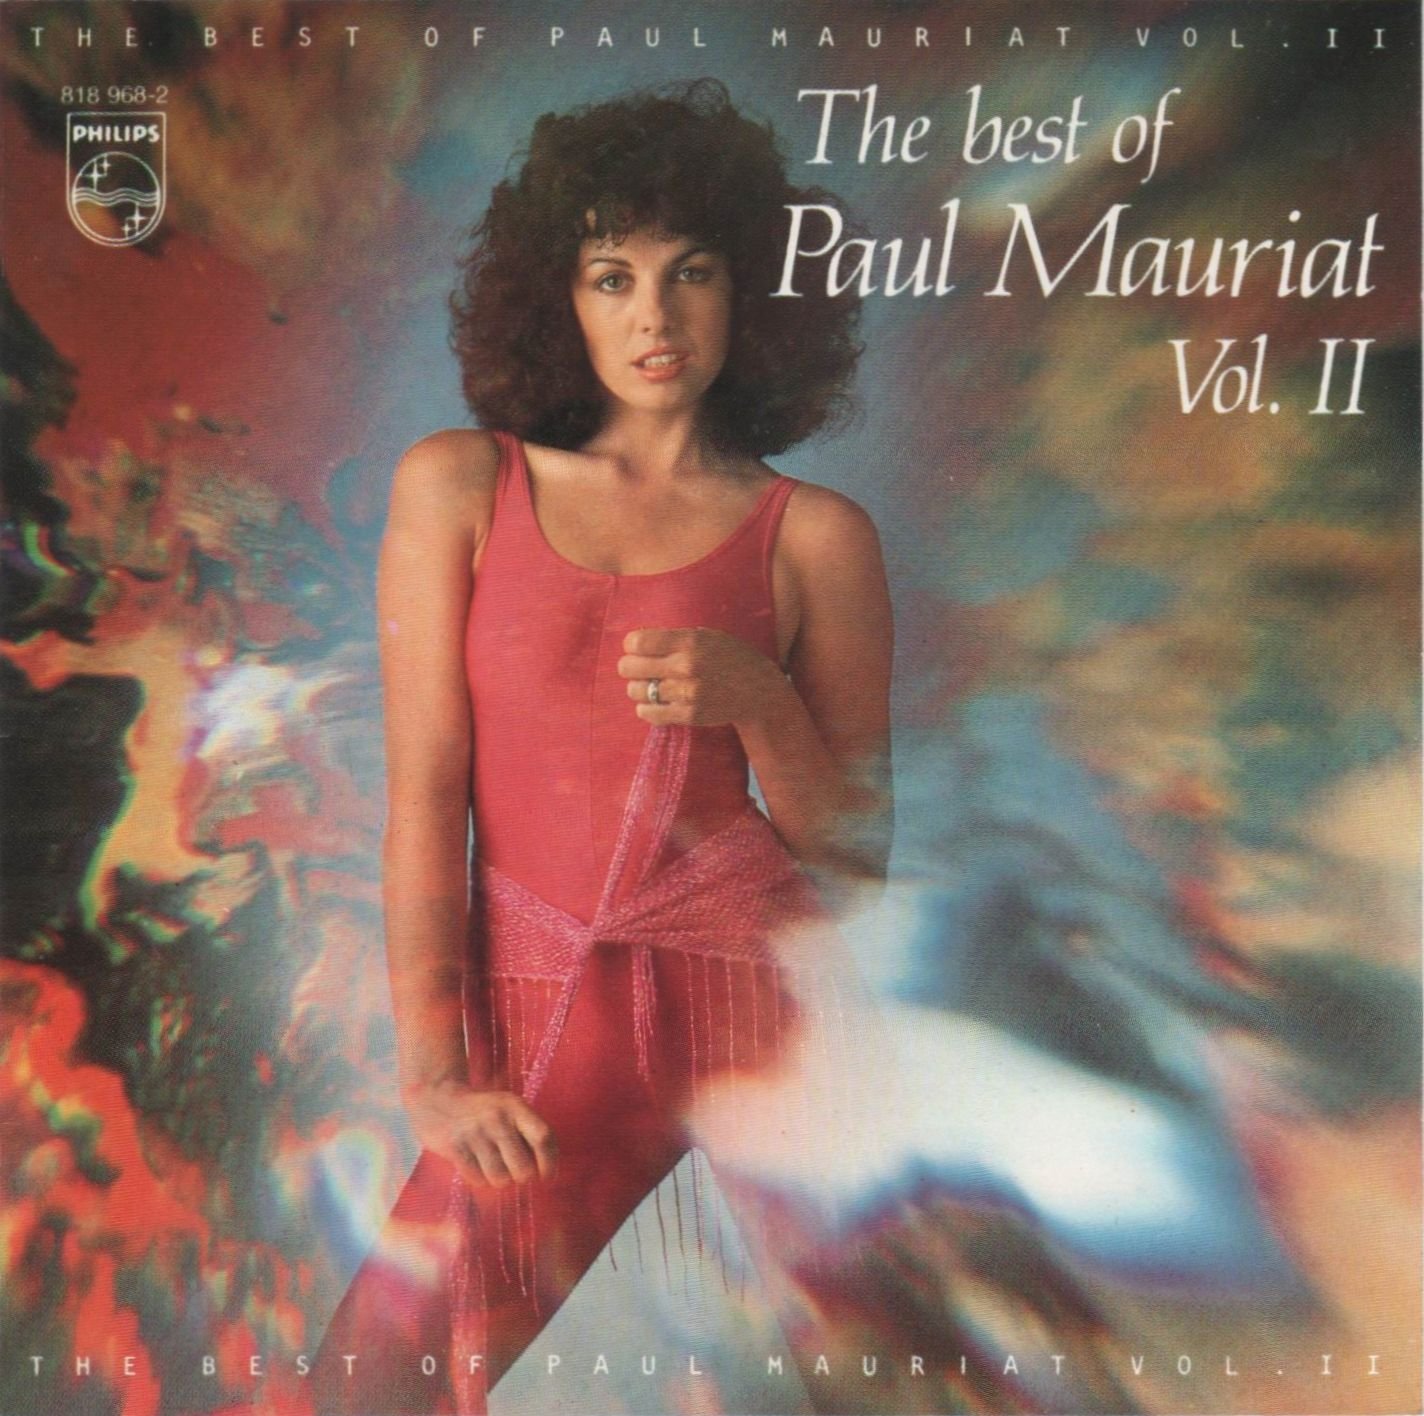 Paul mauriat mp3. Paul Mauriat - the best of Paul Mauriat (Vol. 1-6) (2011). Best of Paul Mauriat Поль Мориа. Paul Mauriat альбомы. Paul Mauriat обложки альбомов.